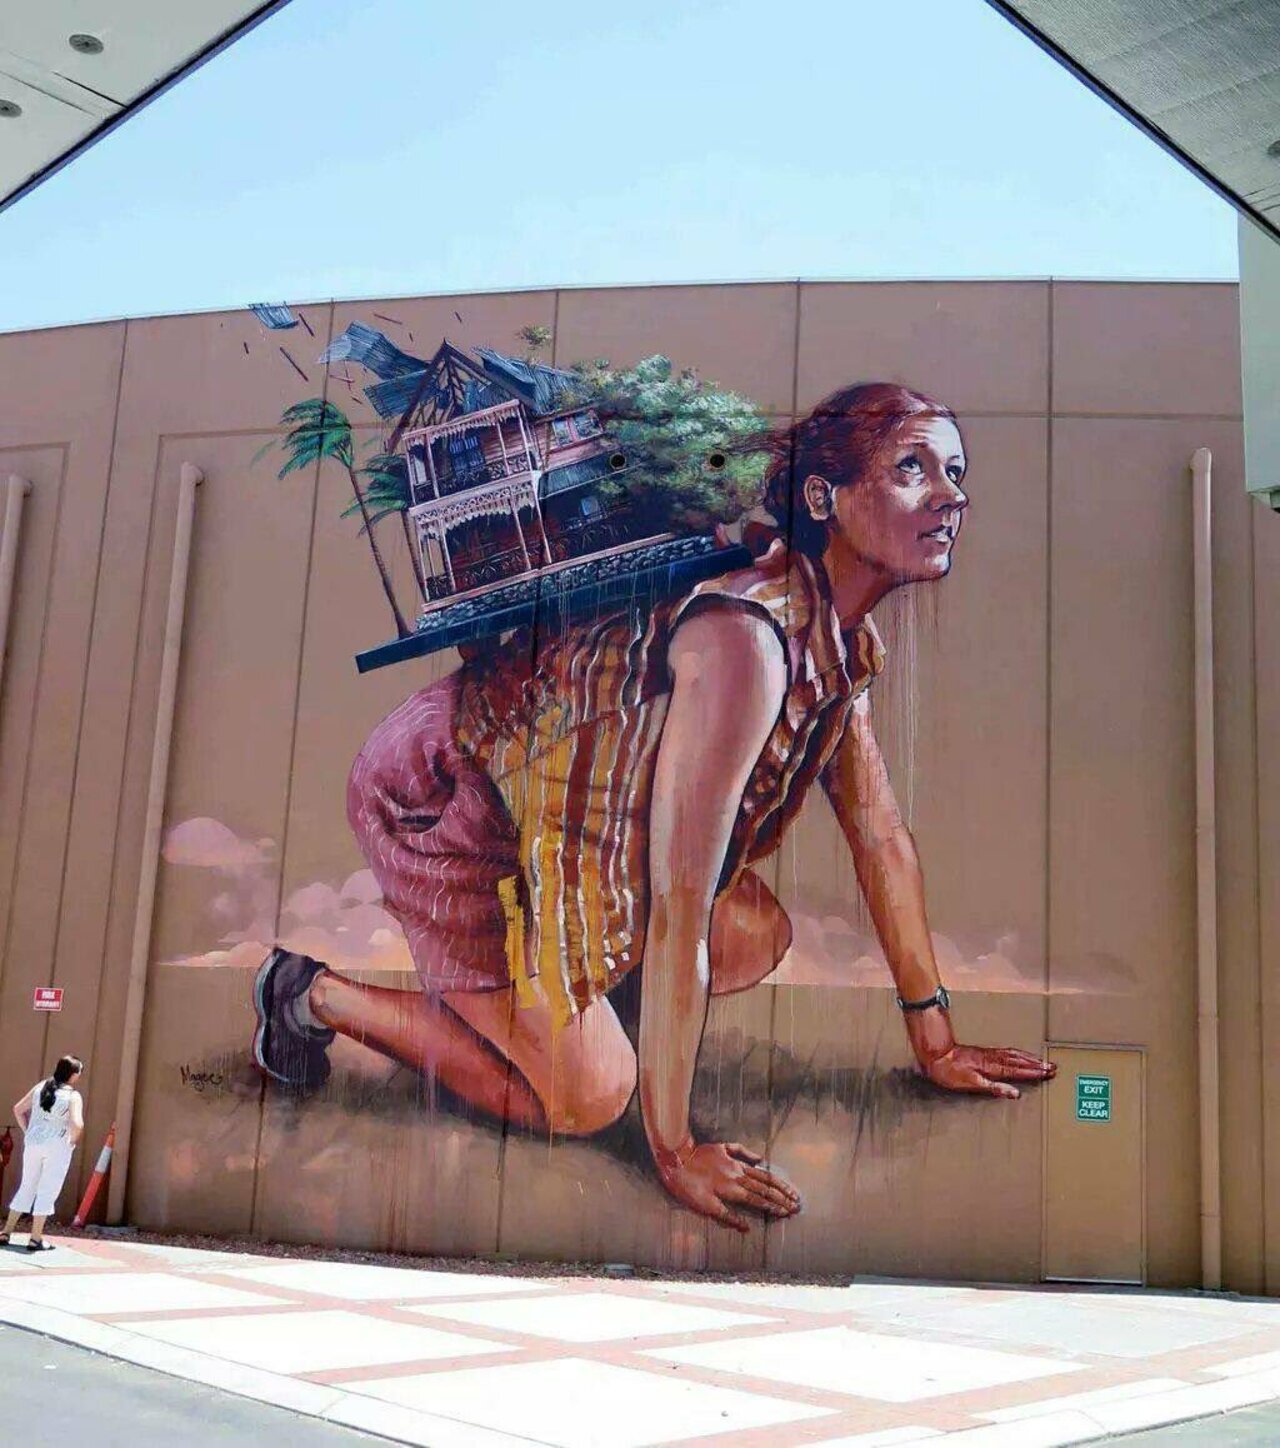 #mural by Fintan Magee #Bunbury #Australia #urbanart #streetart #graffitti #art https://t.co/C1DCDWH7aO